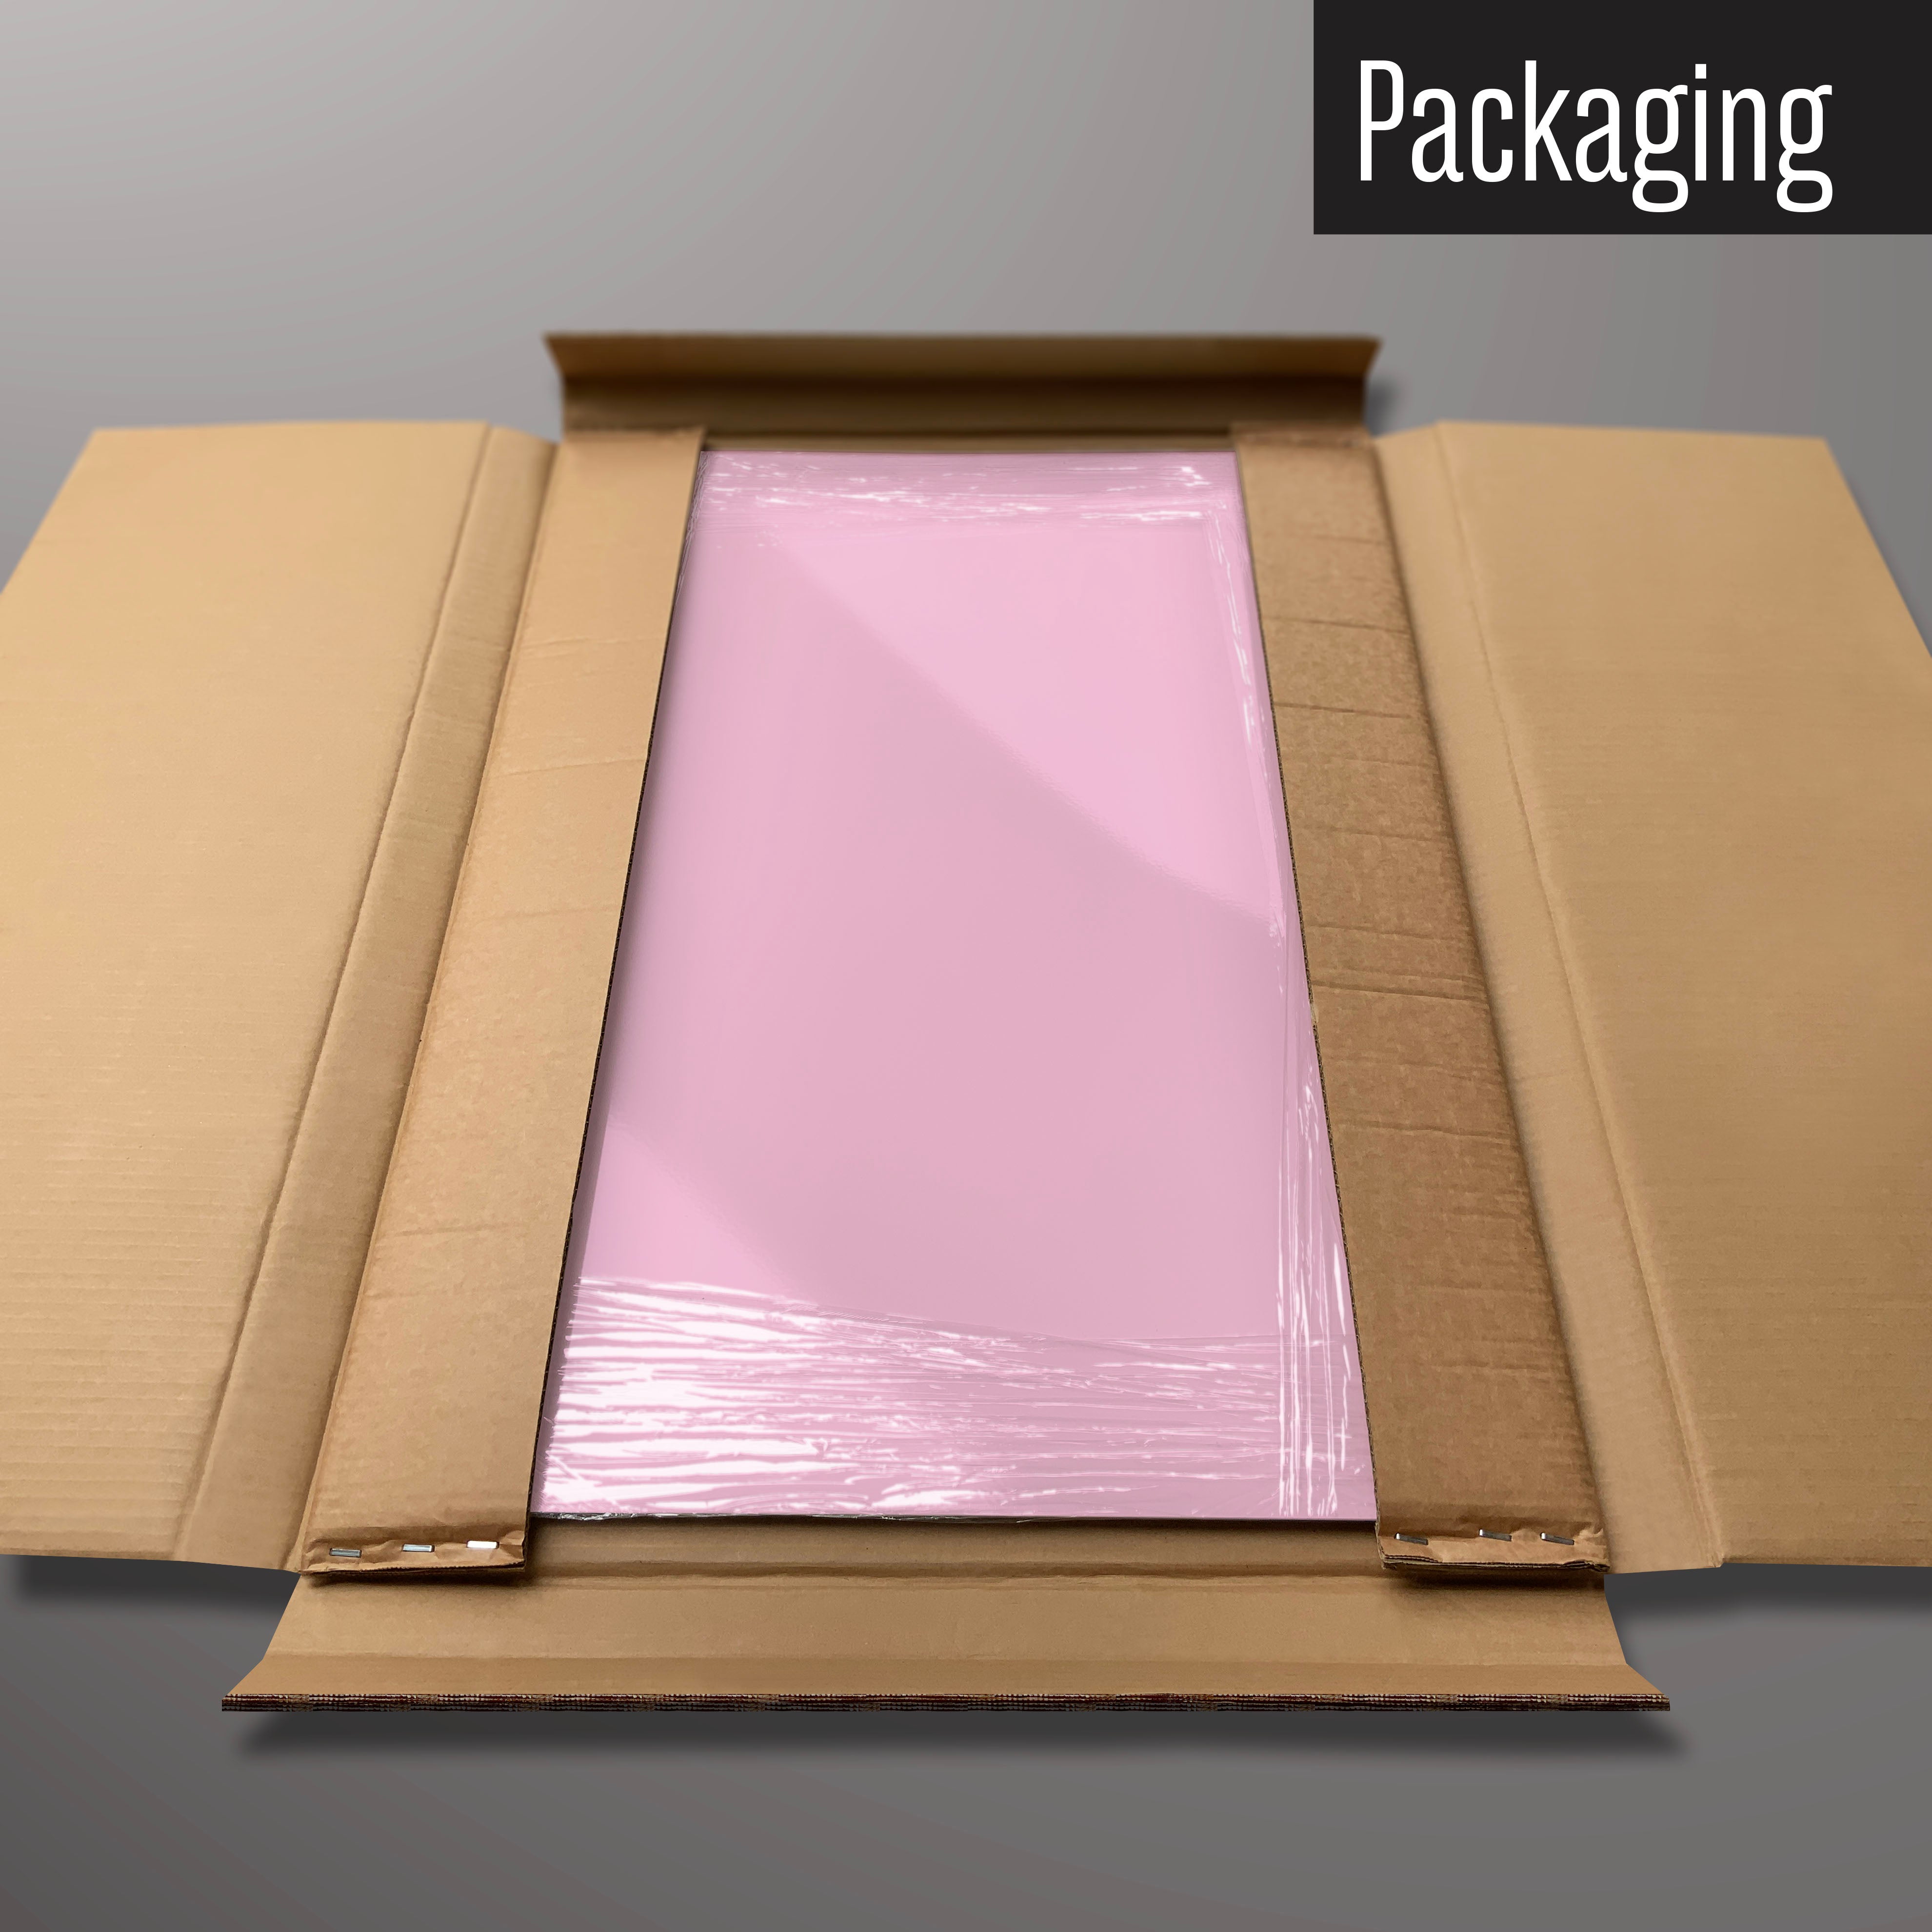 A plain pink magnetic board in it’s cardboard packaging